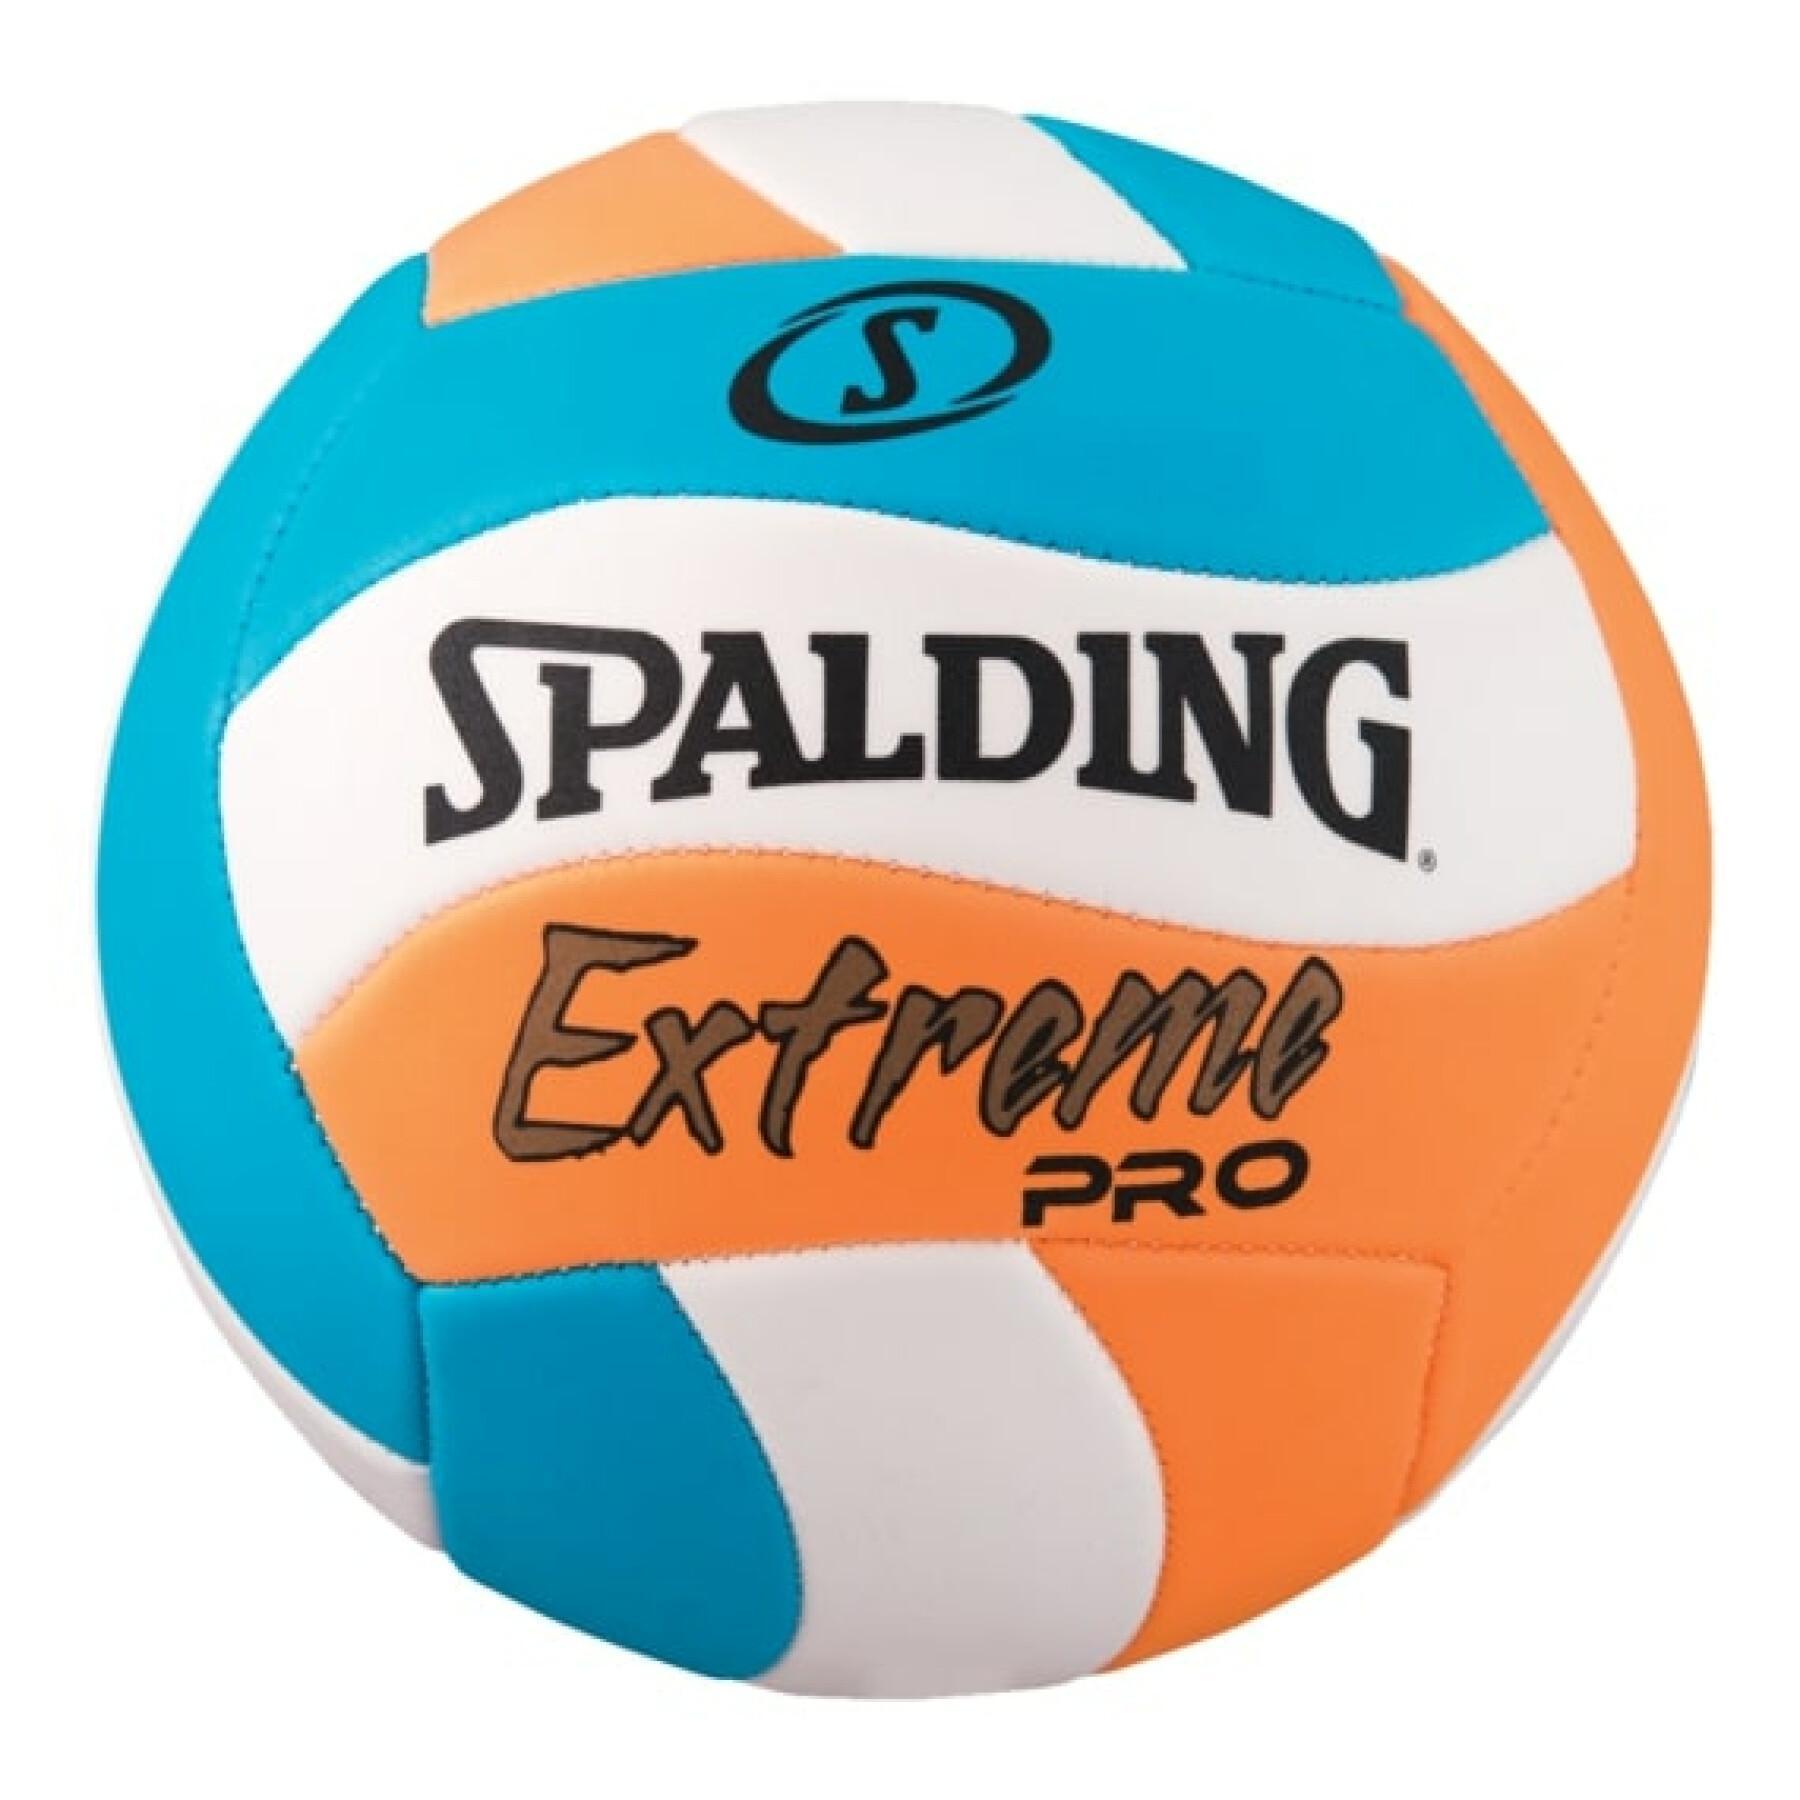 Ballon Spalding Extreme Pro